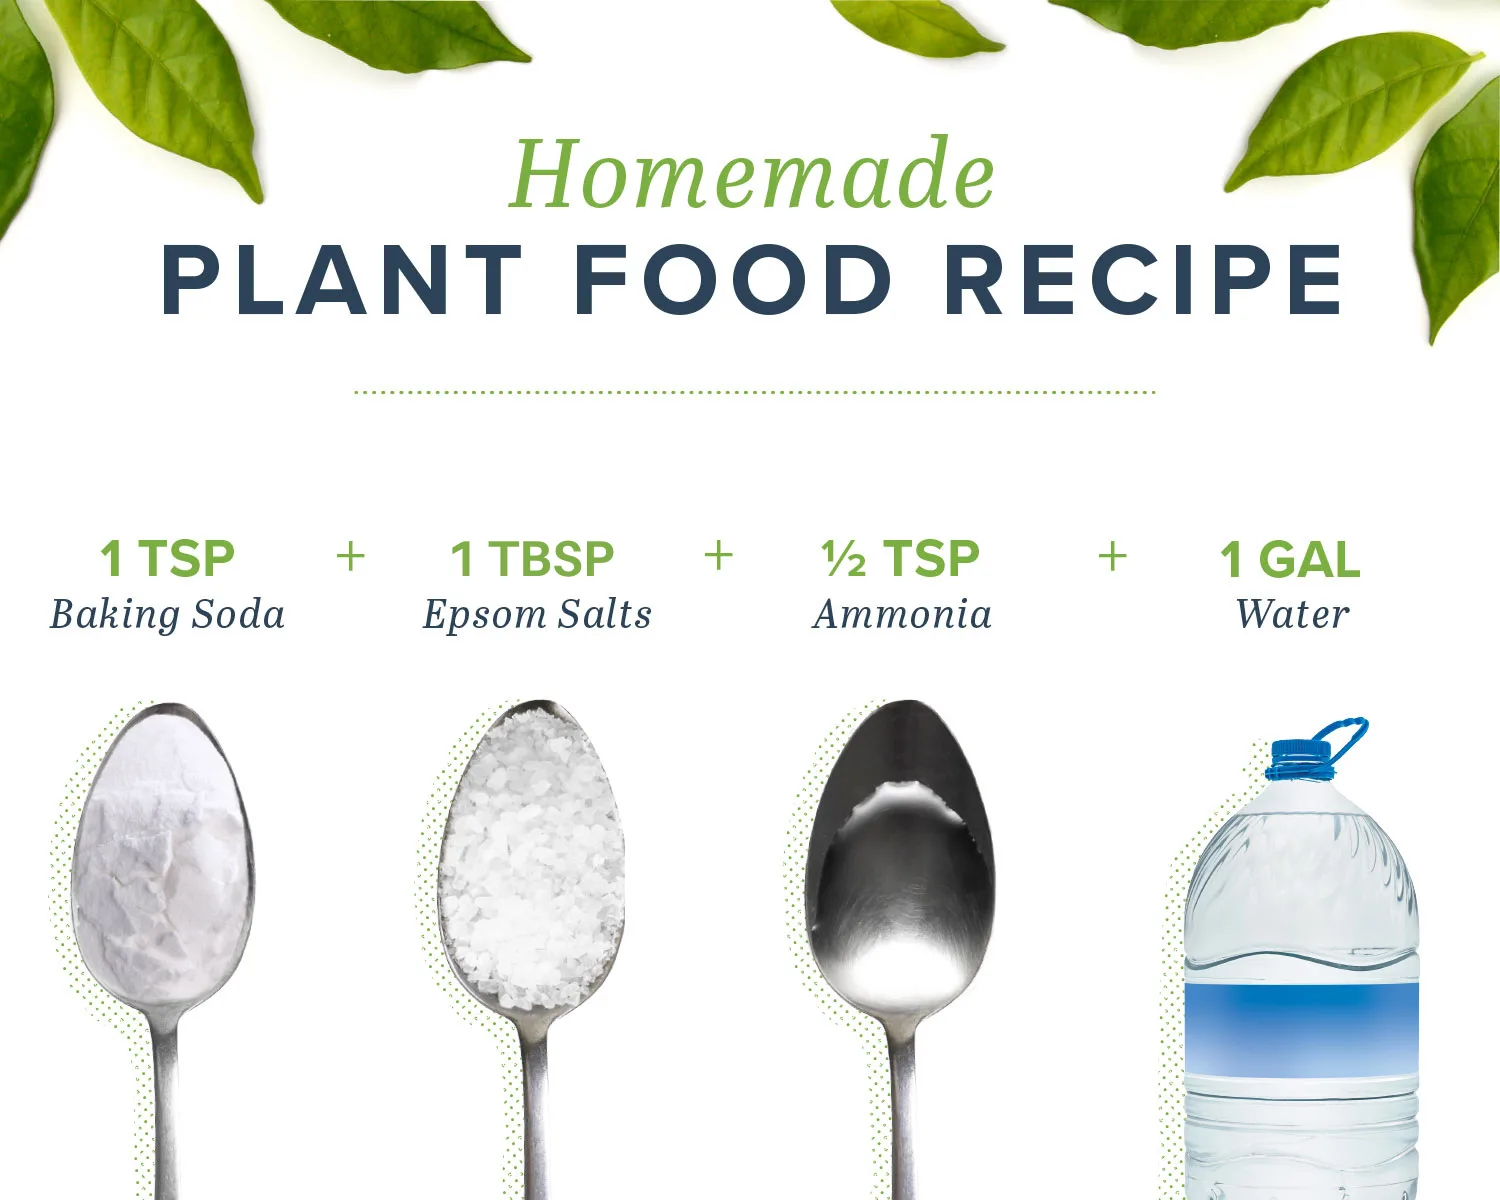 Homemade-plant-food-RECIPE-ingredients